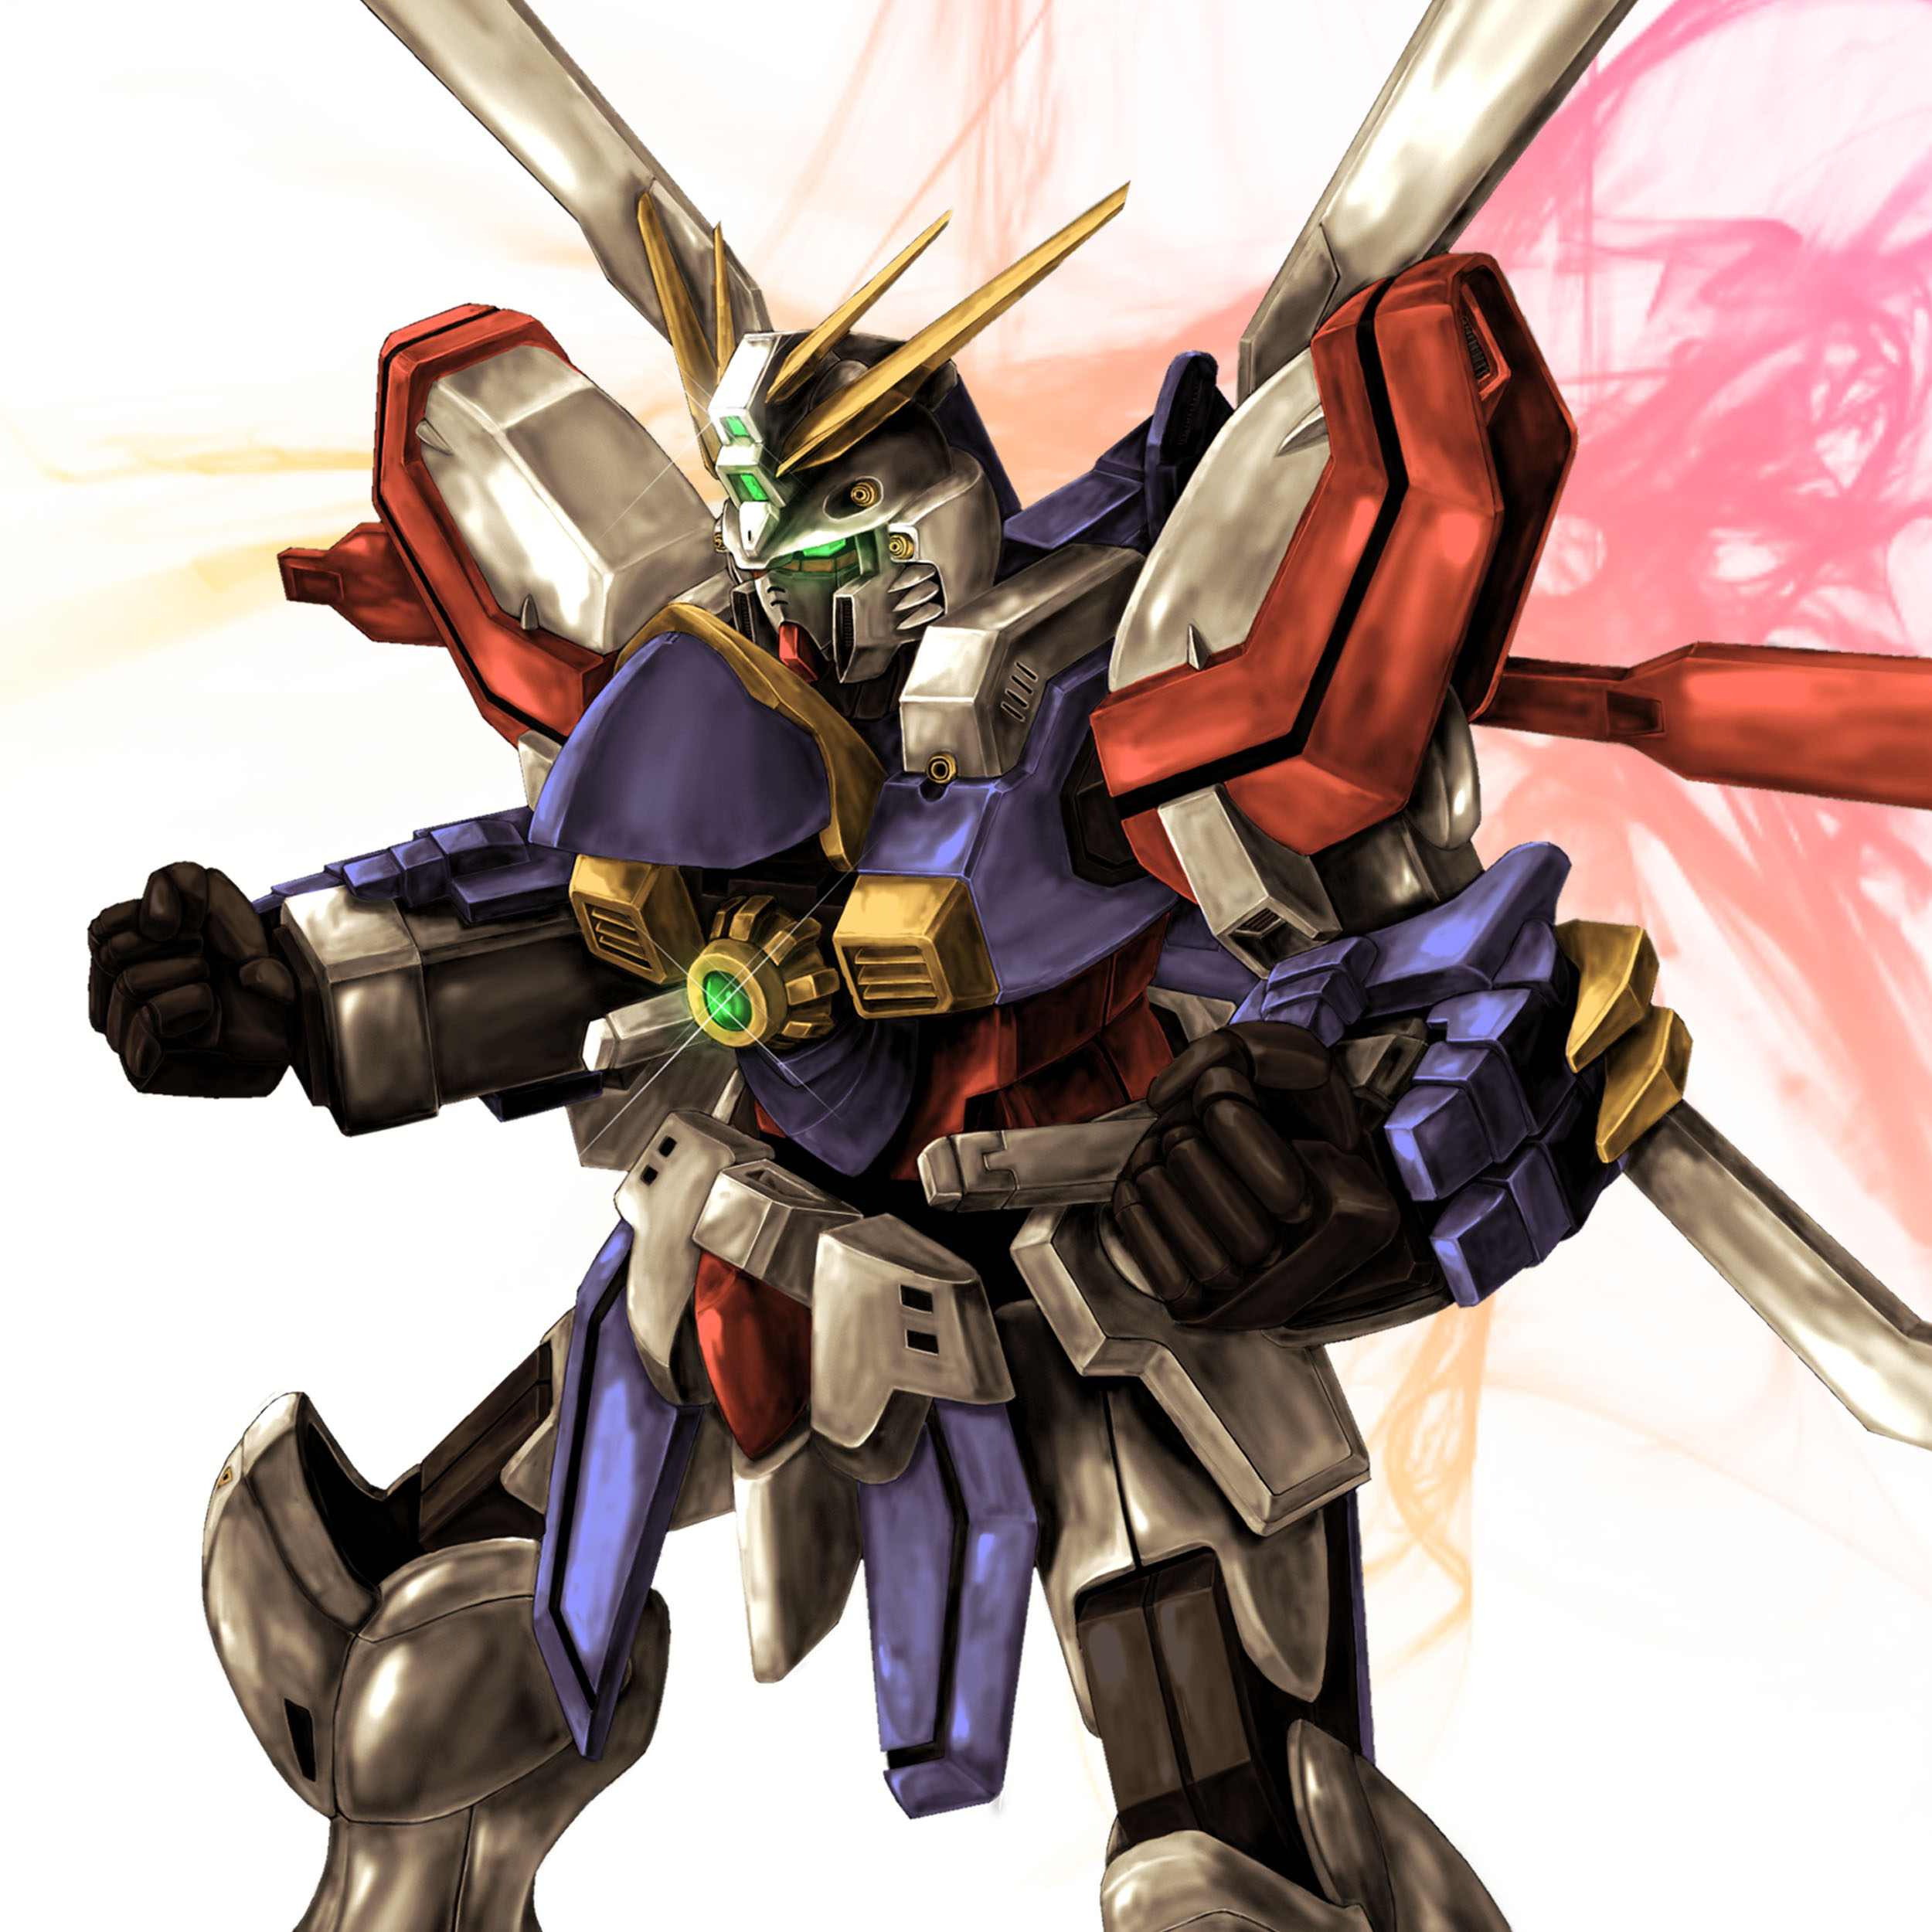 Anime 2500x2500 anime mechs Super Robot Taisen Gundam Mobile Fighter G Gundam God Gundam artwork digital art fan art